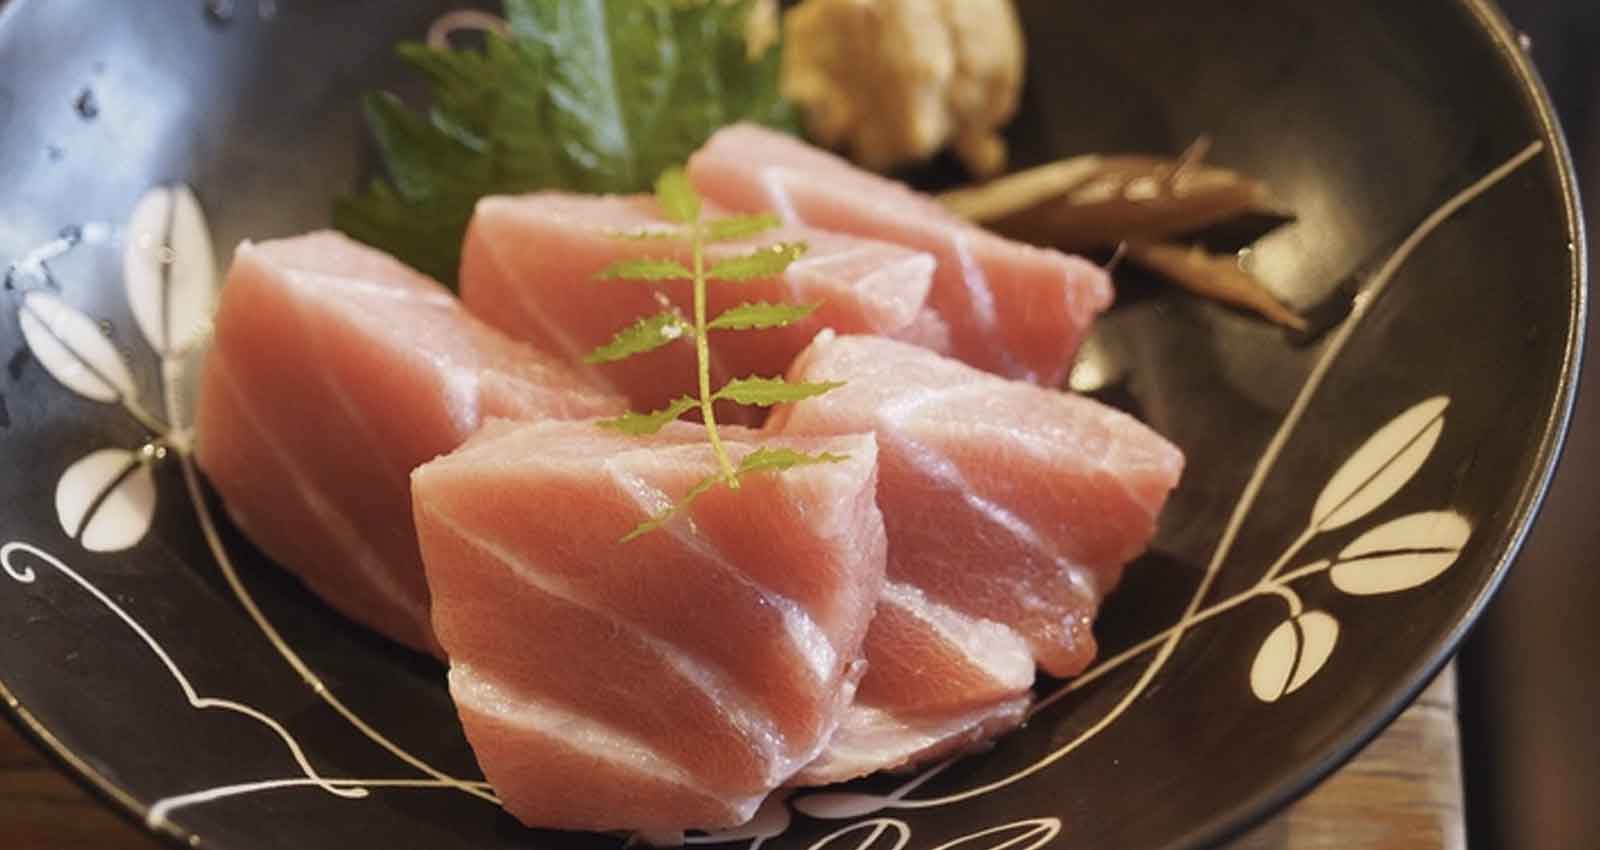 Comida japonesa: Recetas típicas japonesas